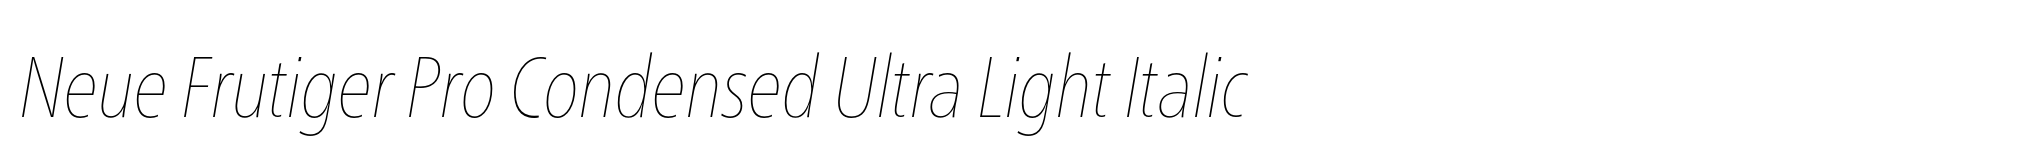 Neue Frutiger Pro Condensed Ultra Light Italic image